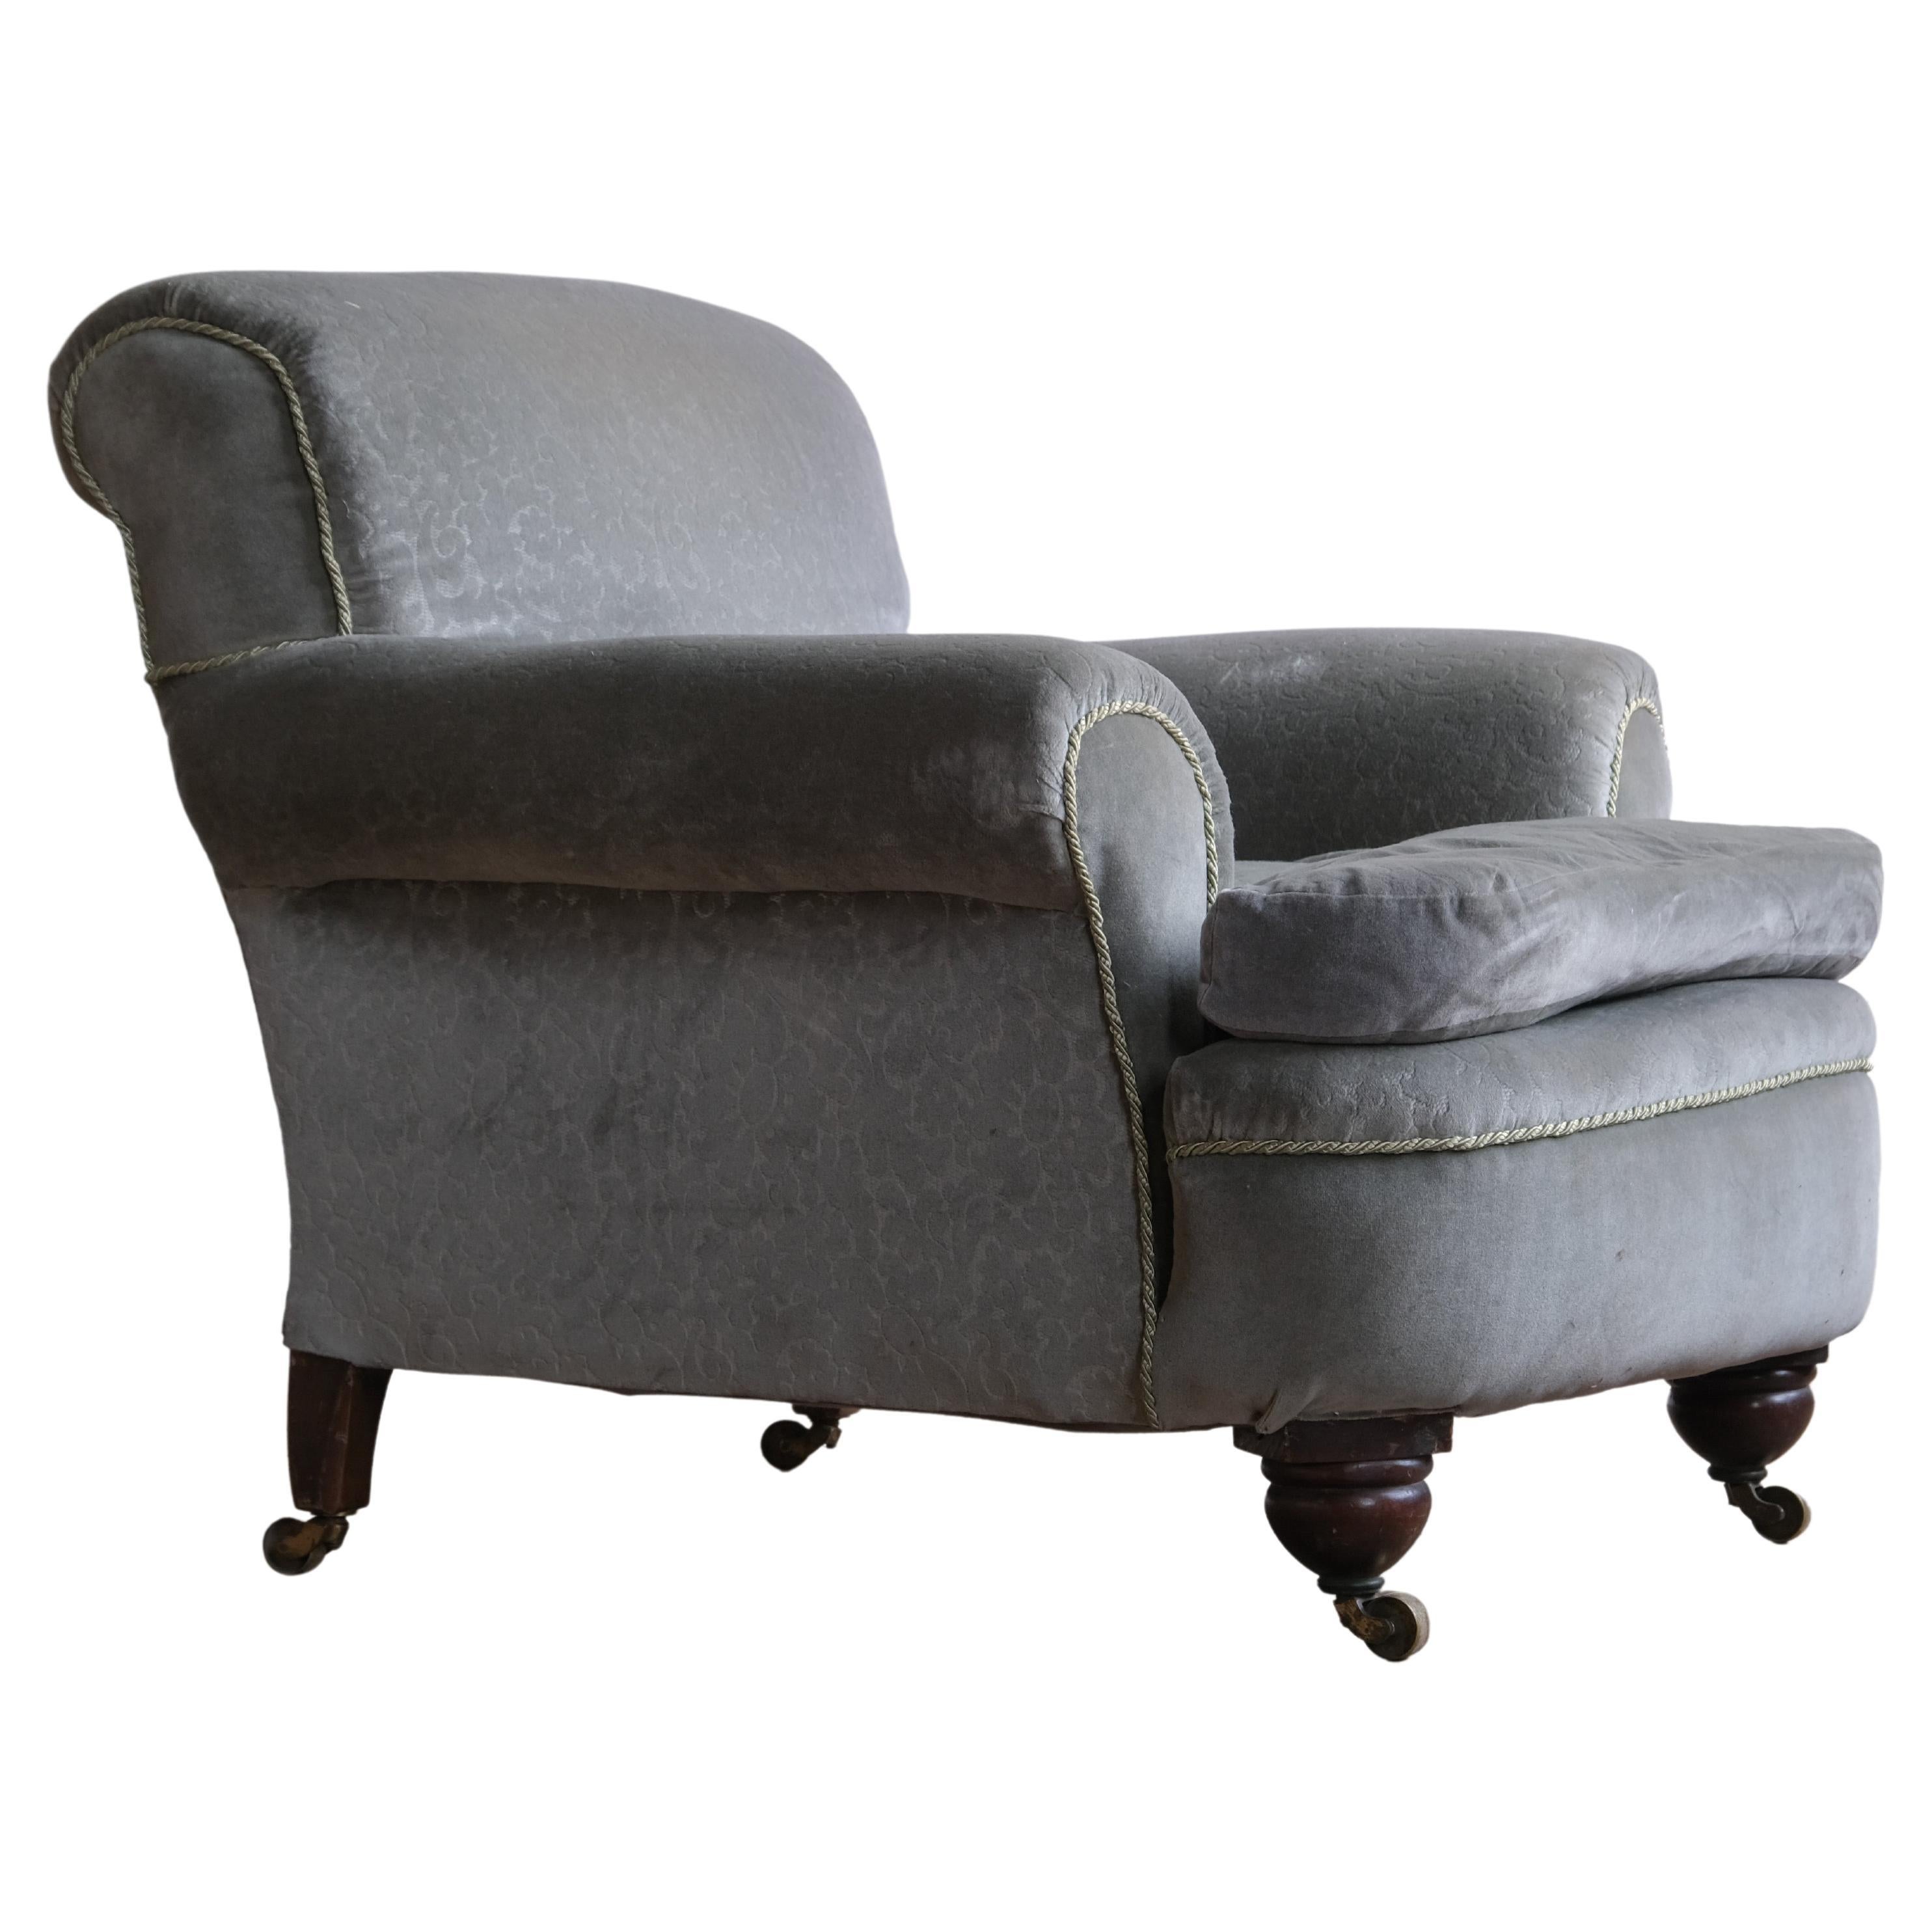 19th Century Howard Style Armchair For Sale